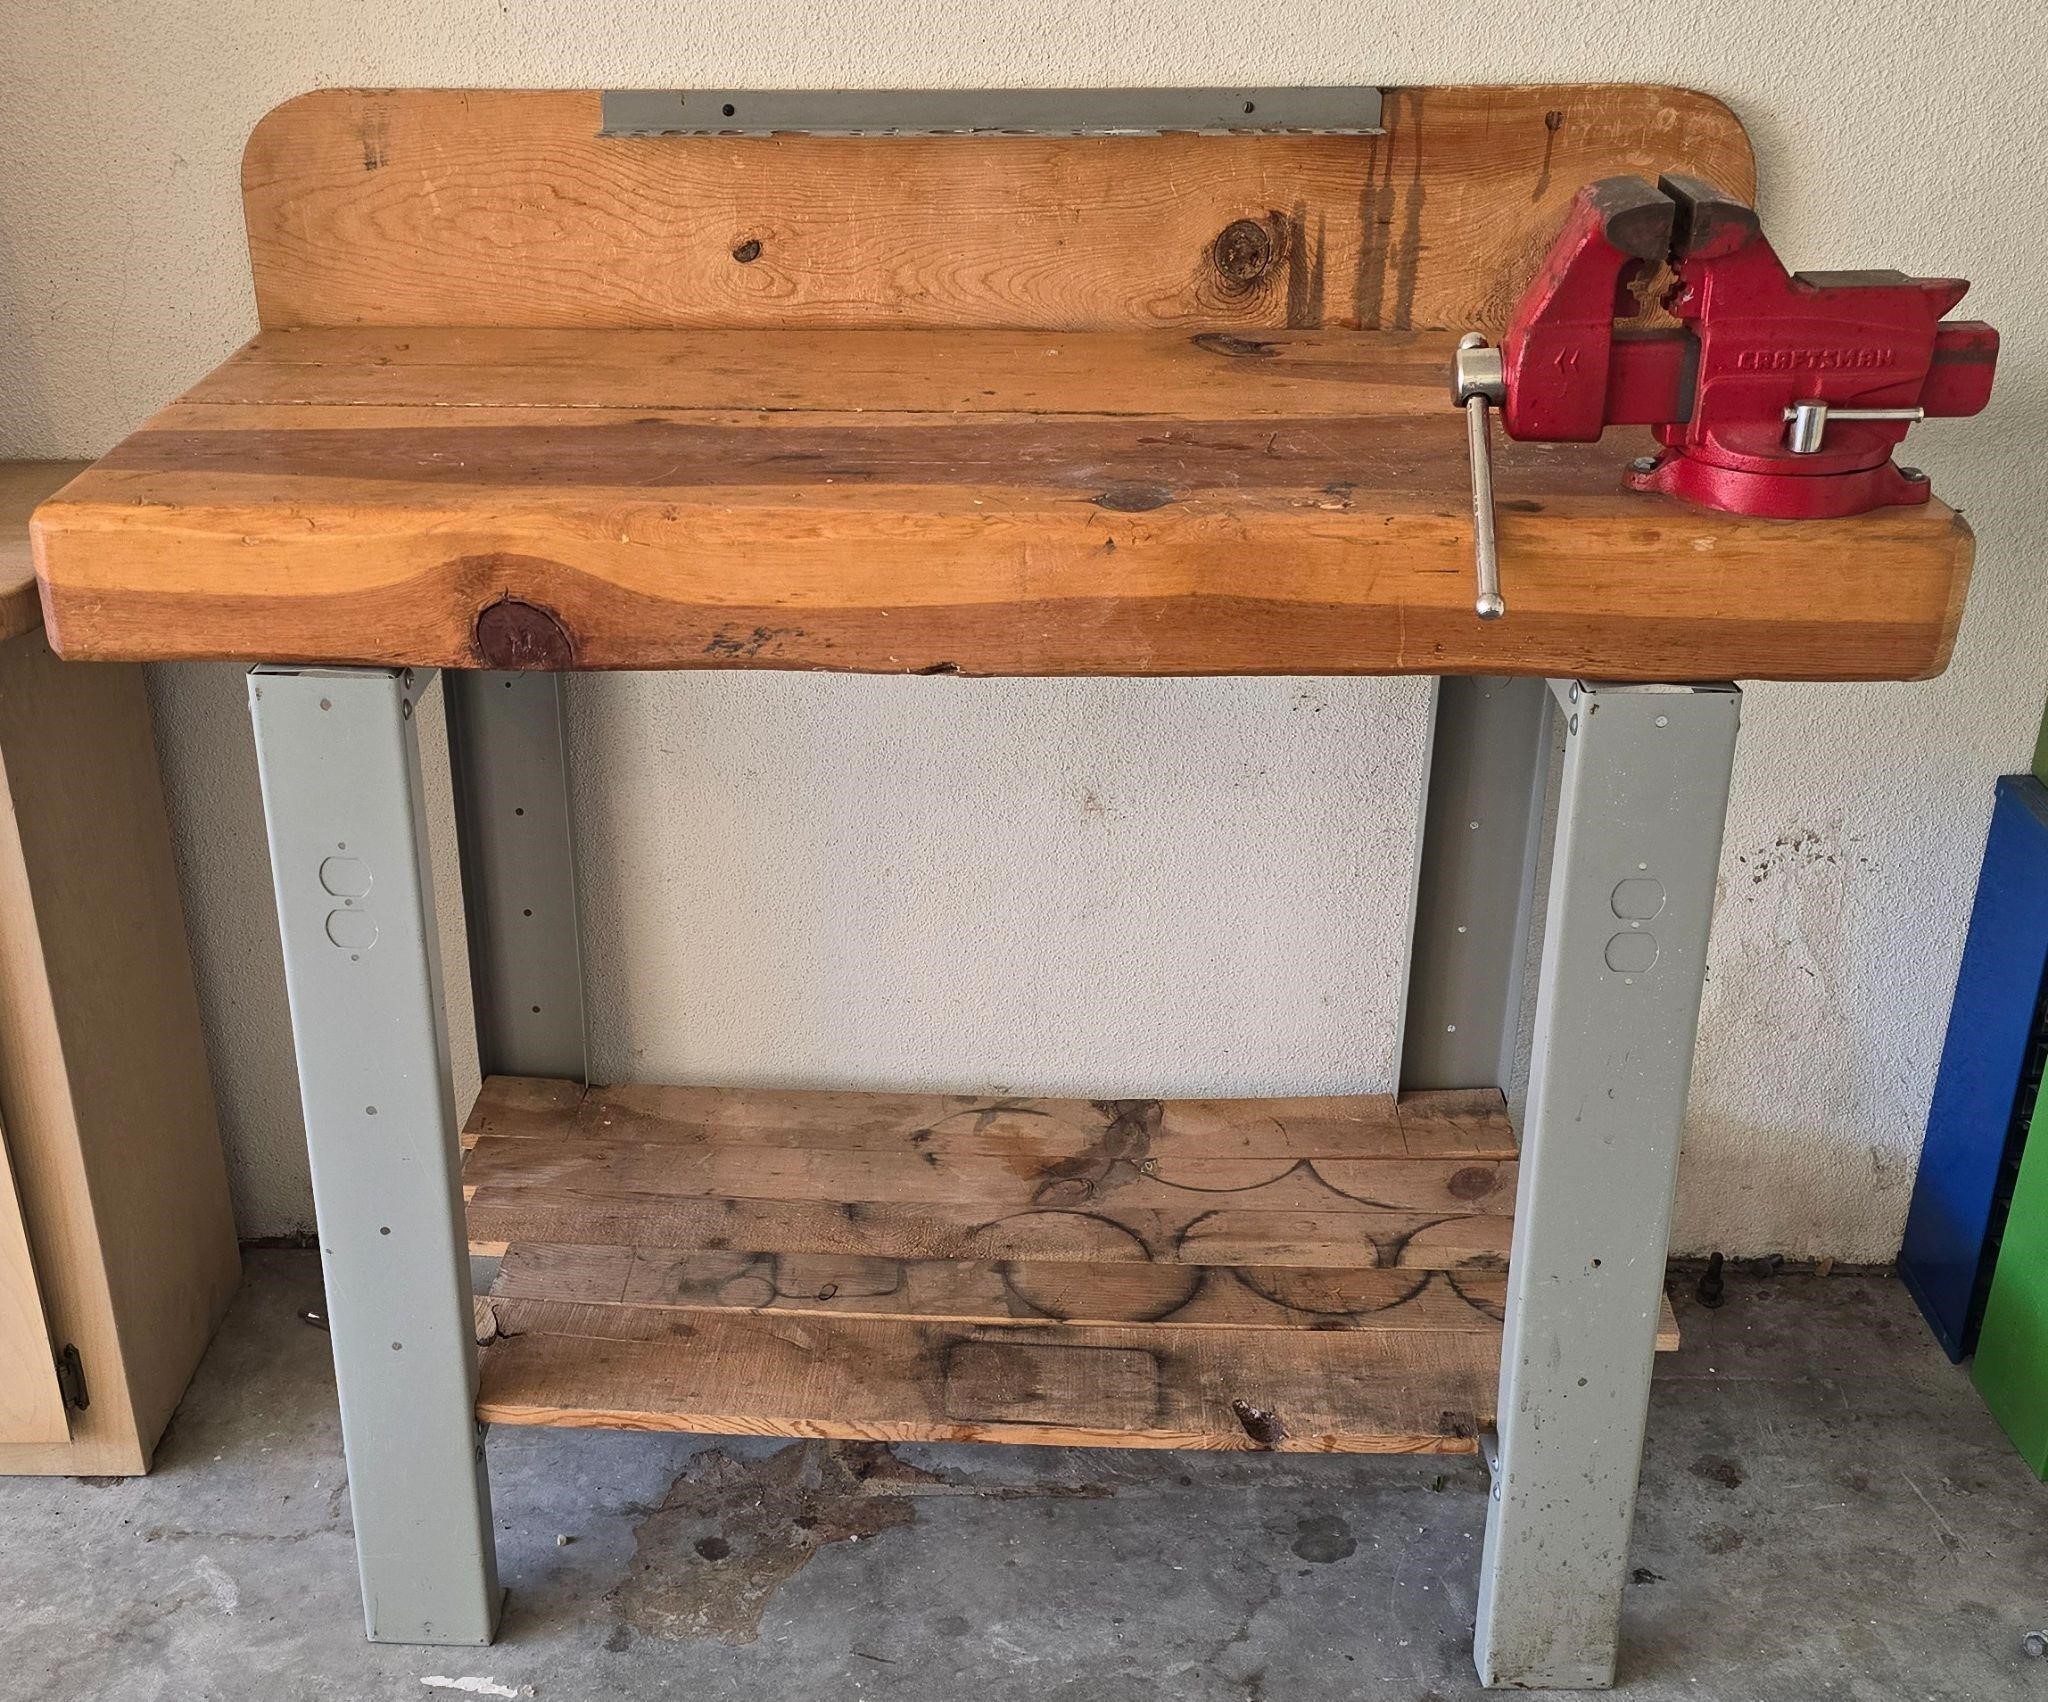 Wooden work bench with Craftsman vise